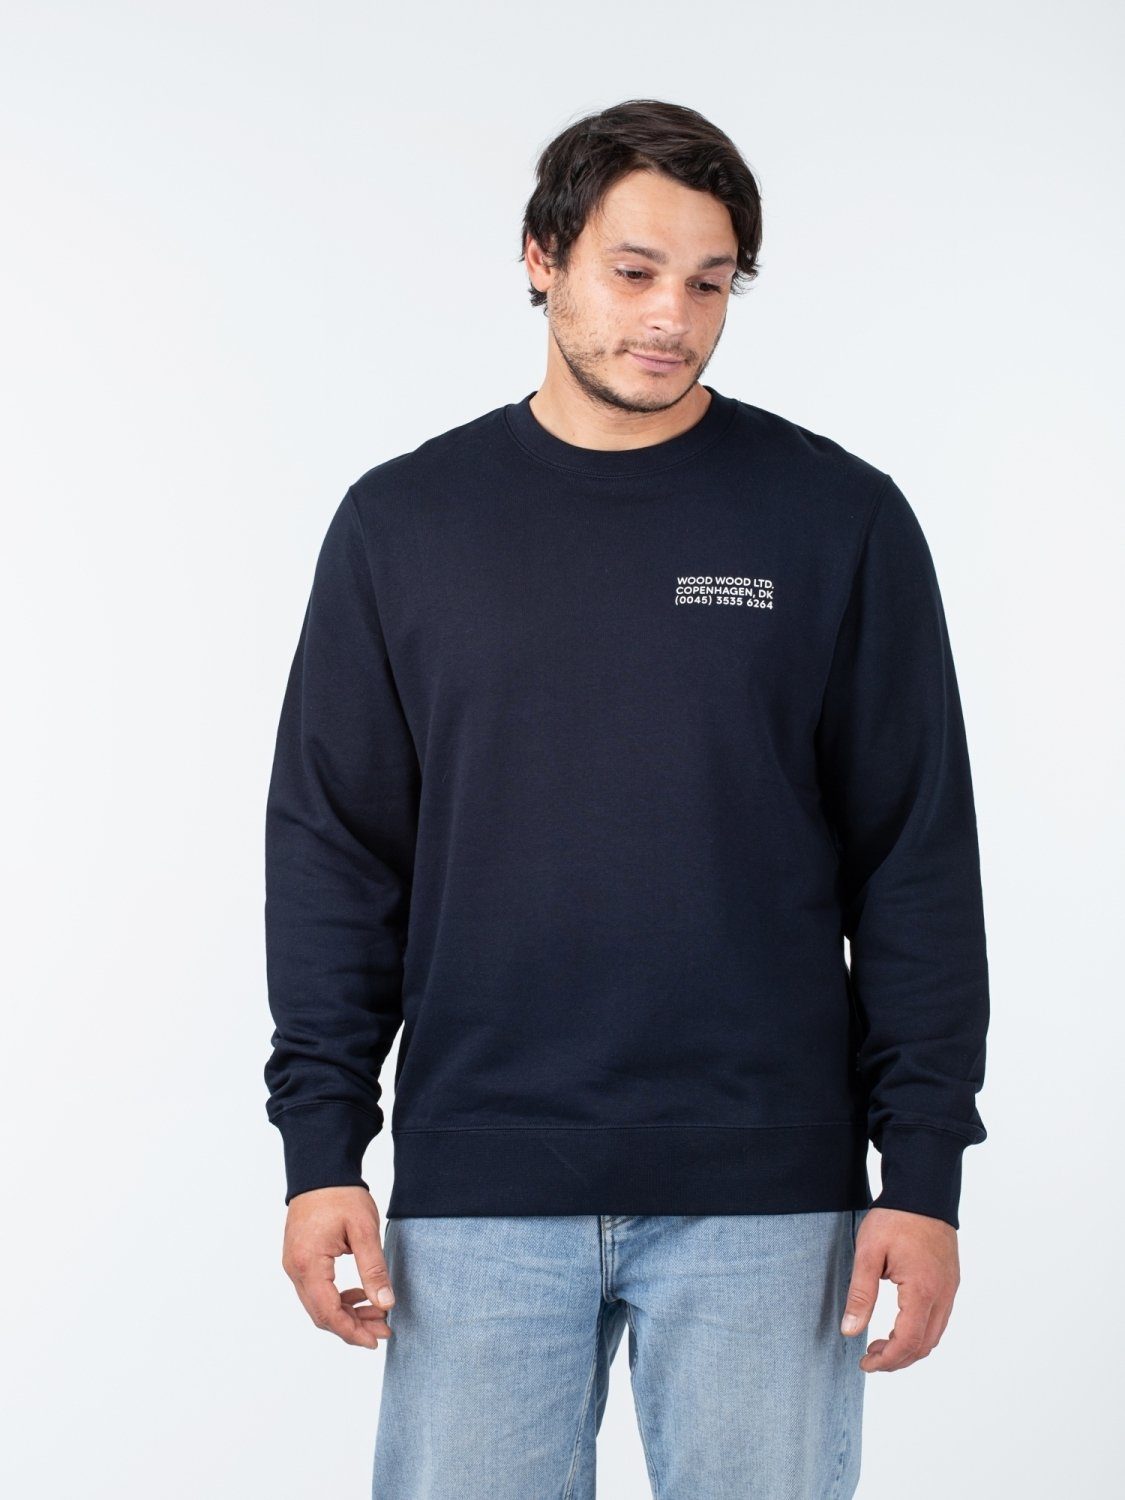 Hugh Wood Sweater WOOD Sweatshirt Info WOOD Navy Wood